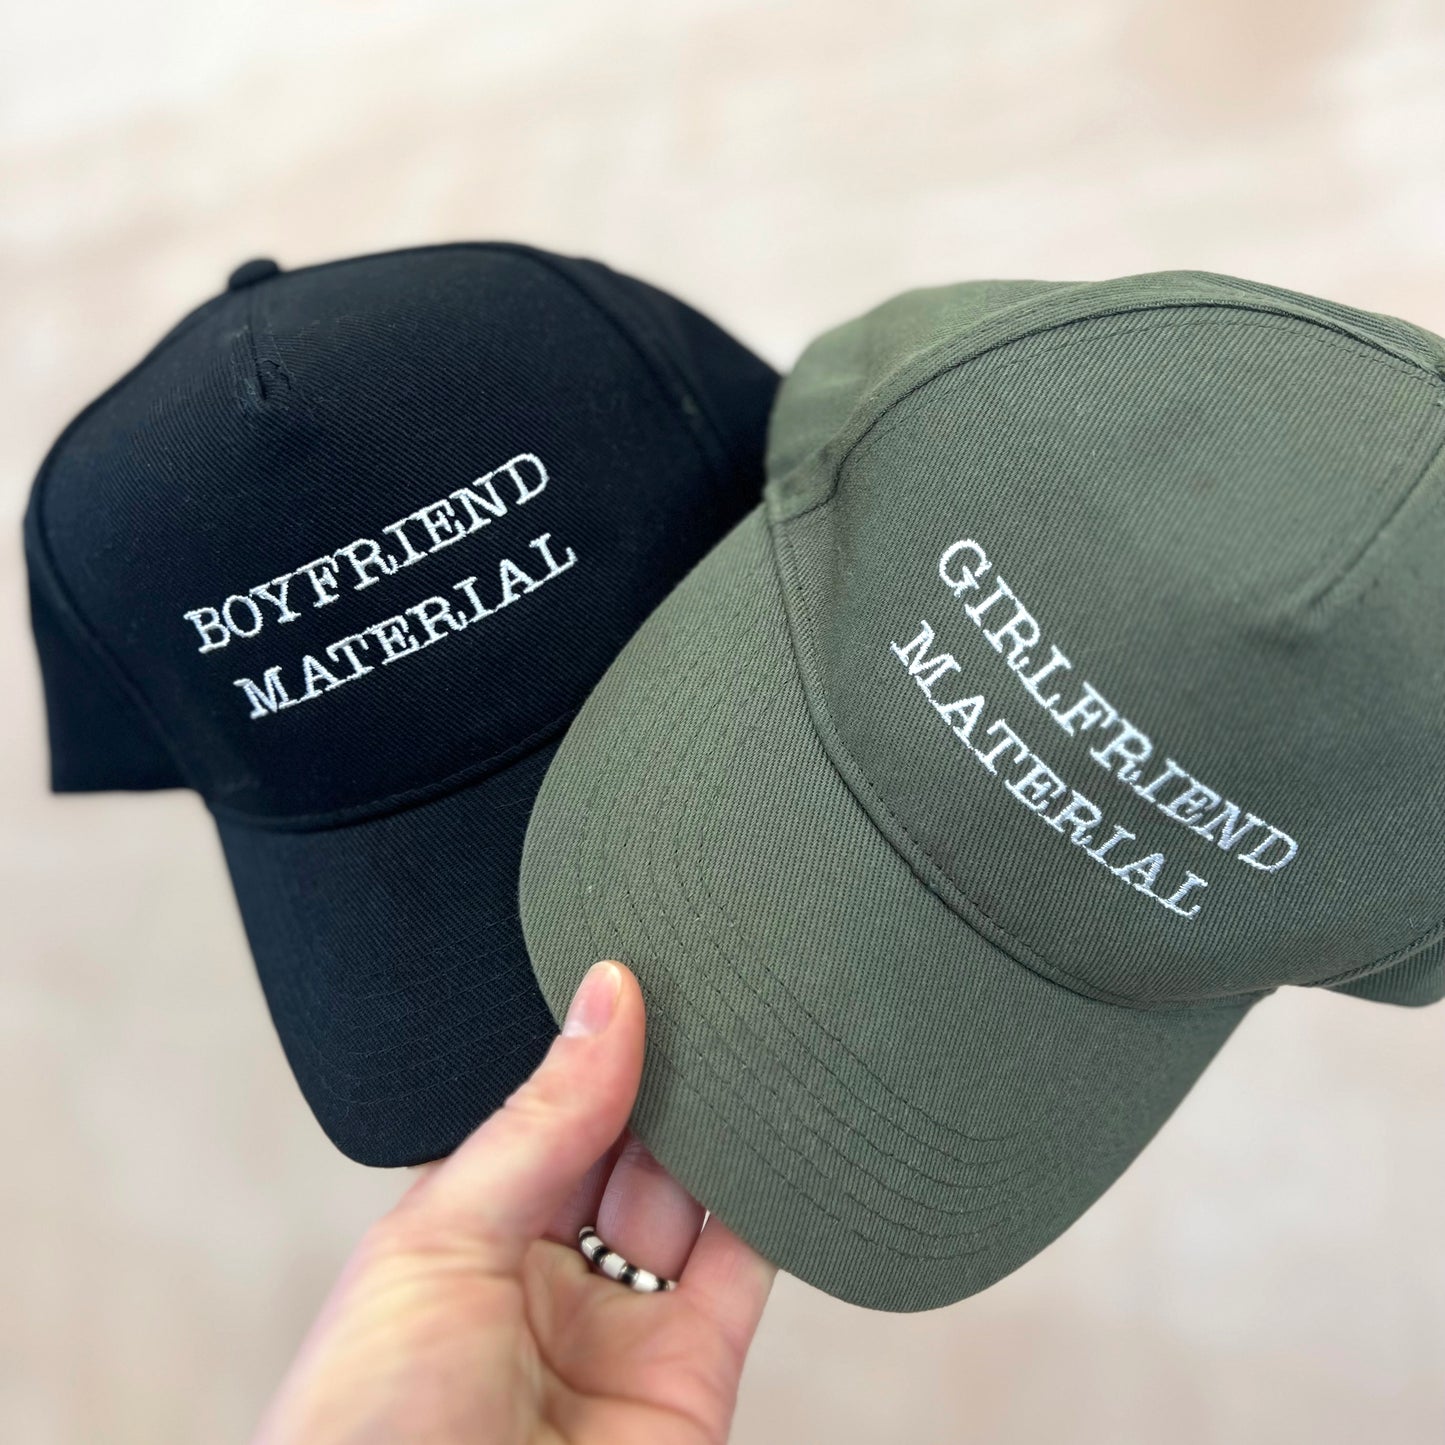 Boyfriend/Girlfriend Material Fun Embroidered Caps